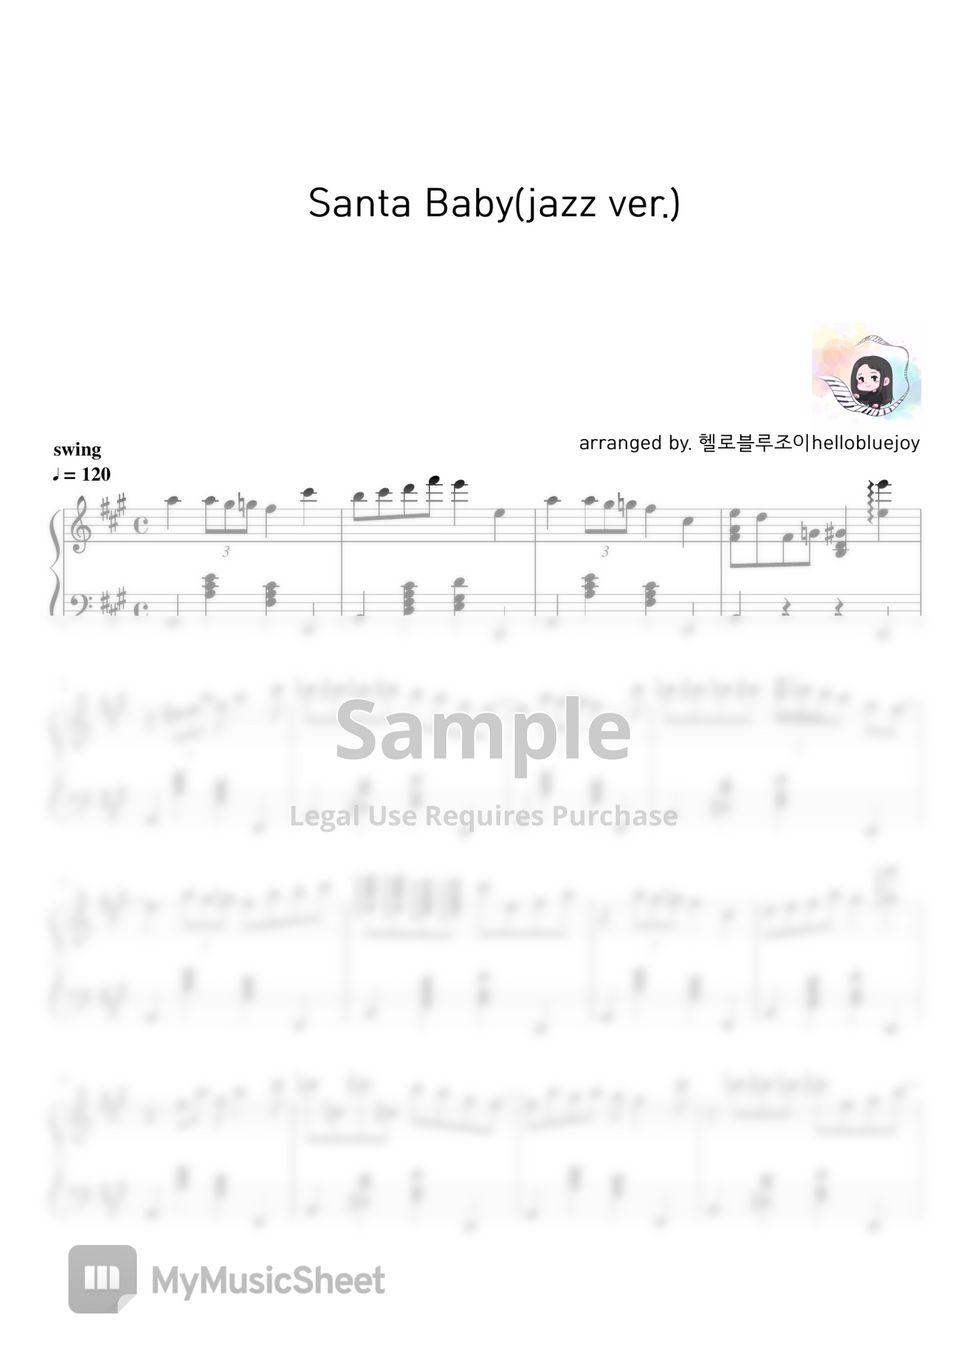 Christmas Song - Santa Baby (jazz ver.) by hellobluejoy